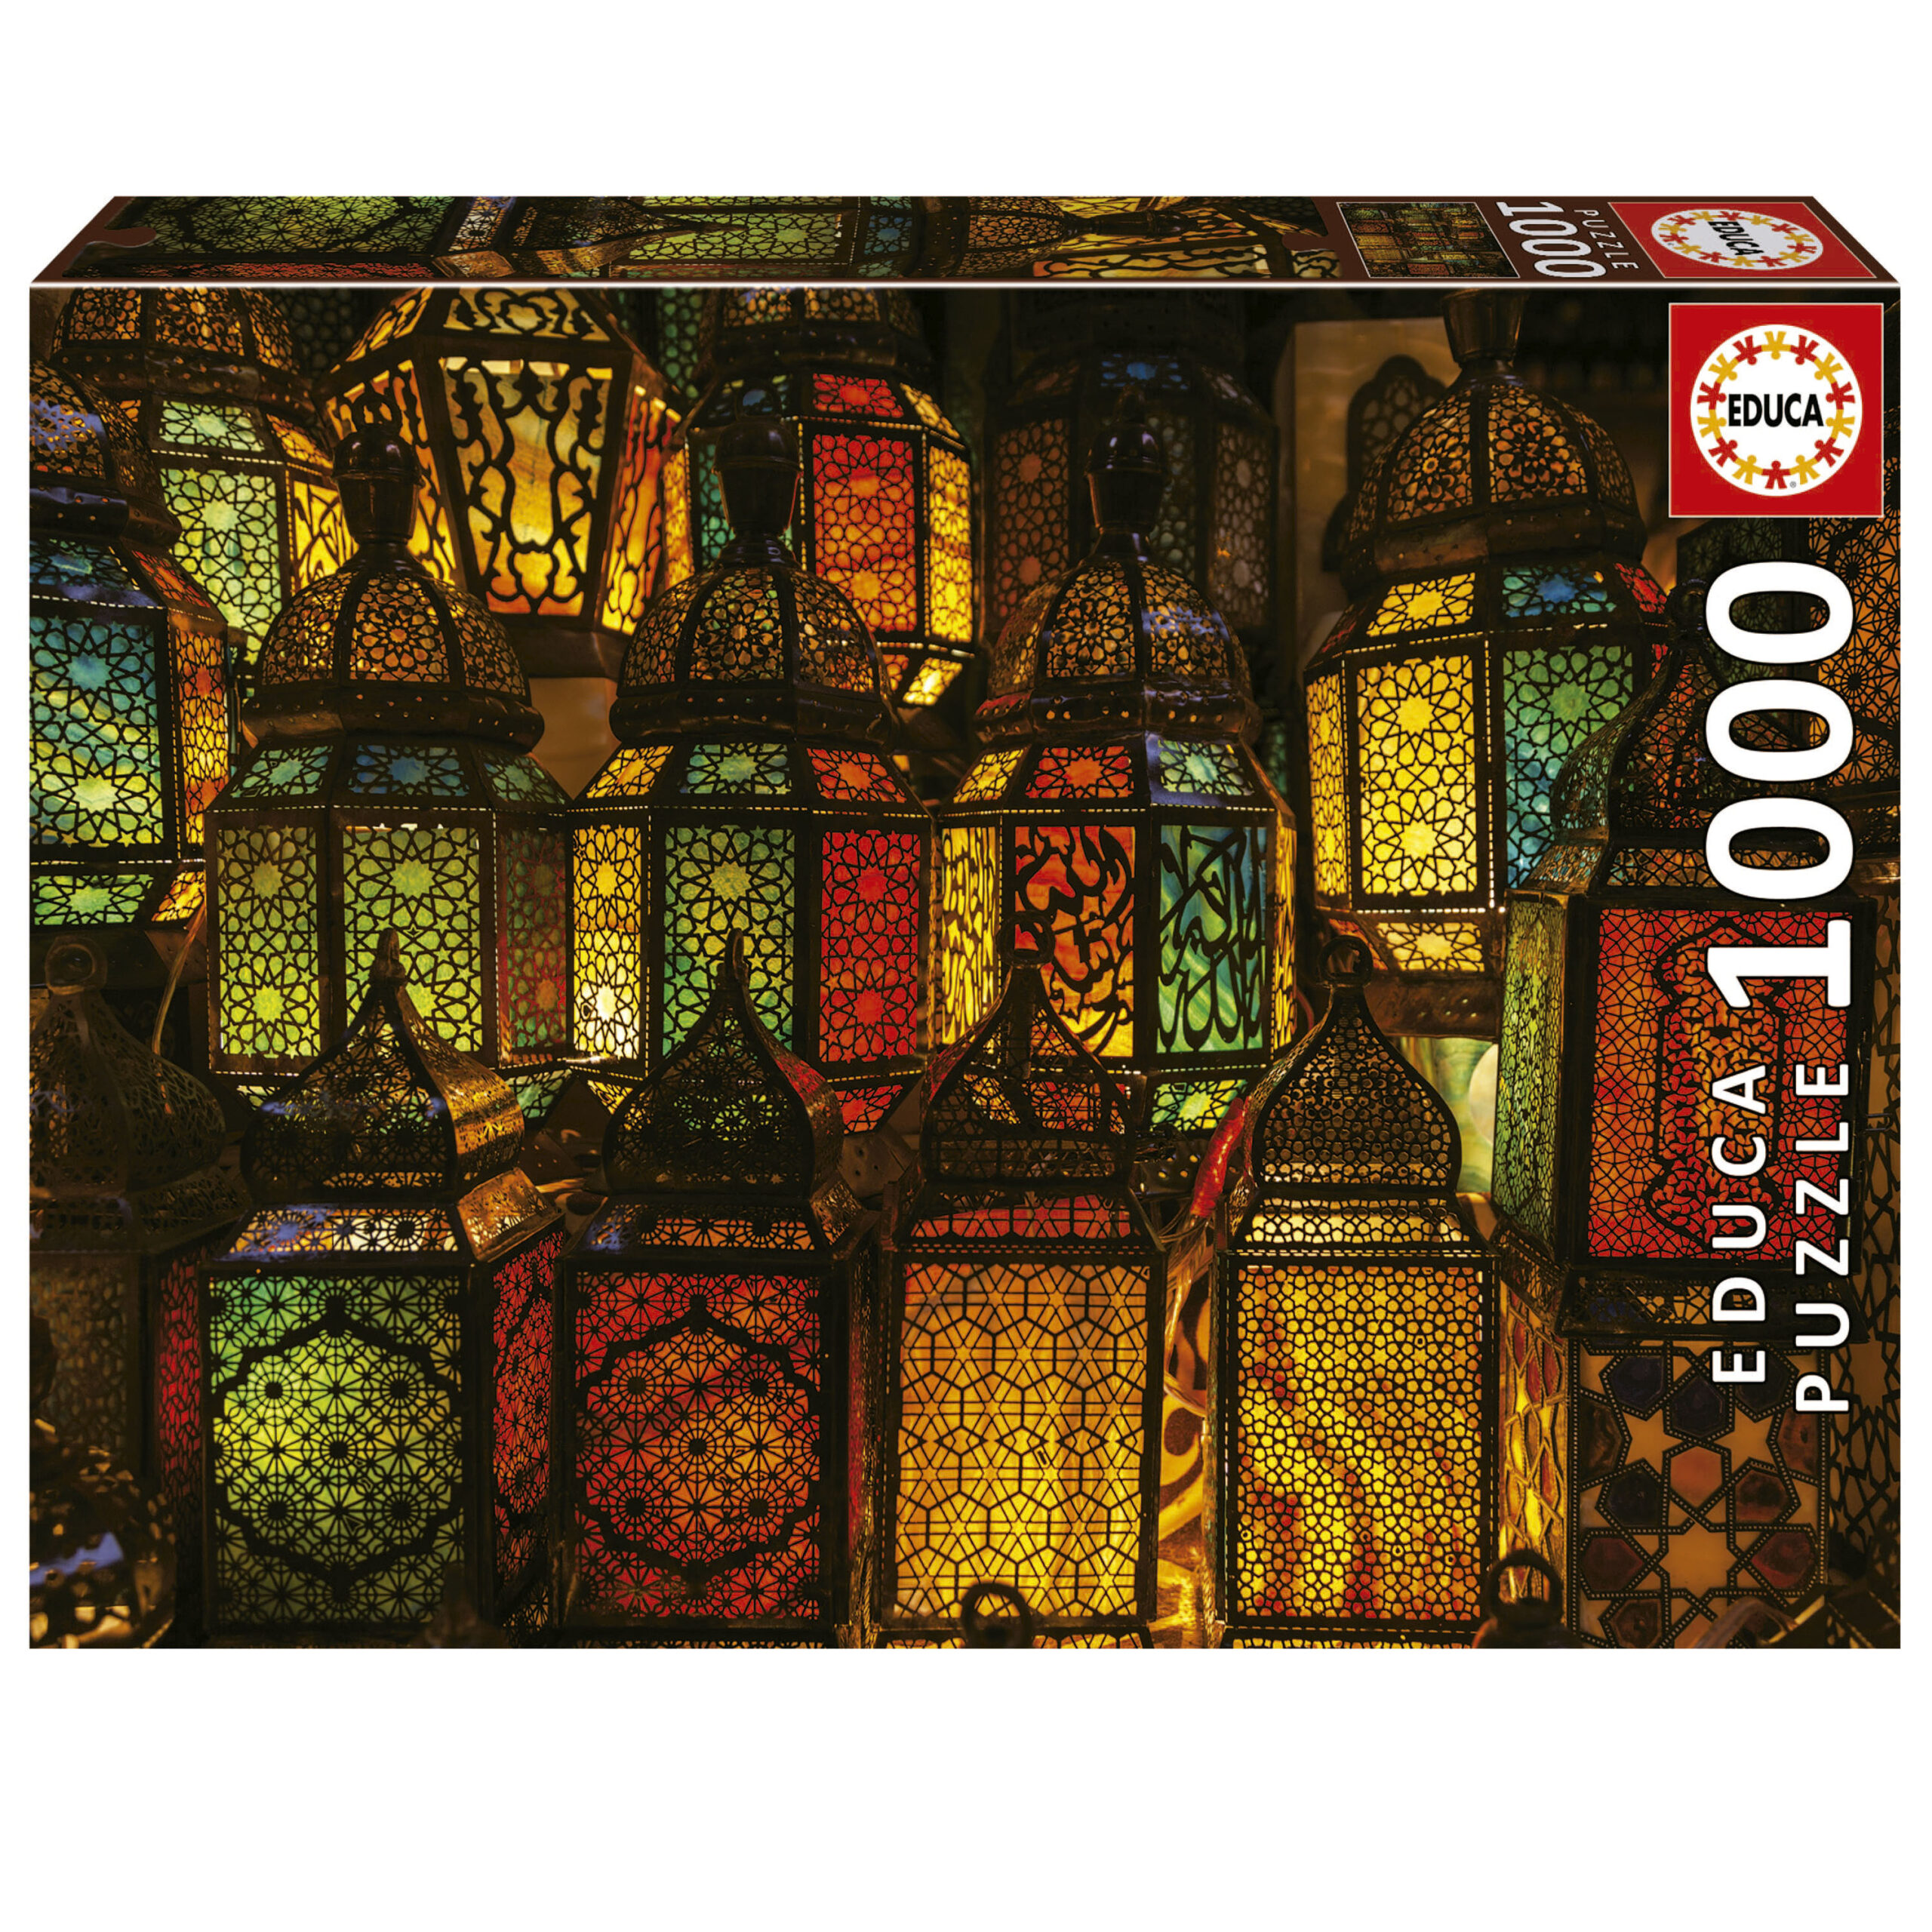 Educa Borras - Puzzle de 1500 peças: Passeio Italiano, 85 x 60 cm, com cola  fix para pendurar ㅤ, PUZZLE 1500+ pçs